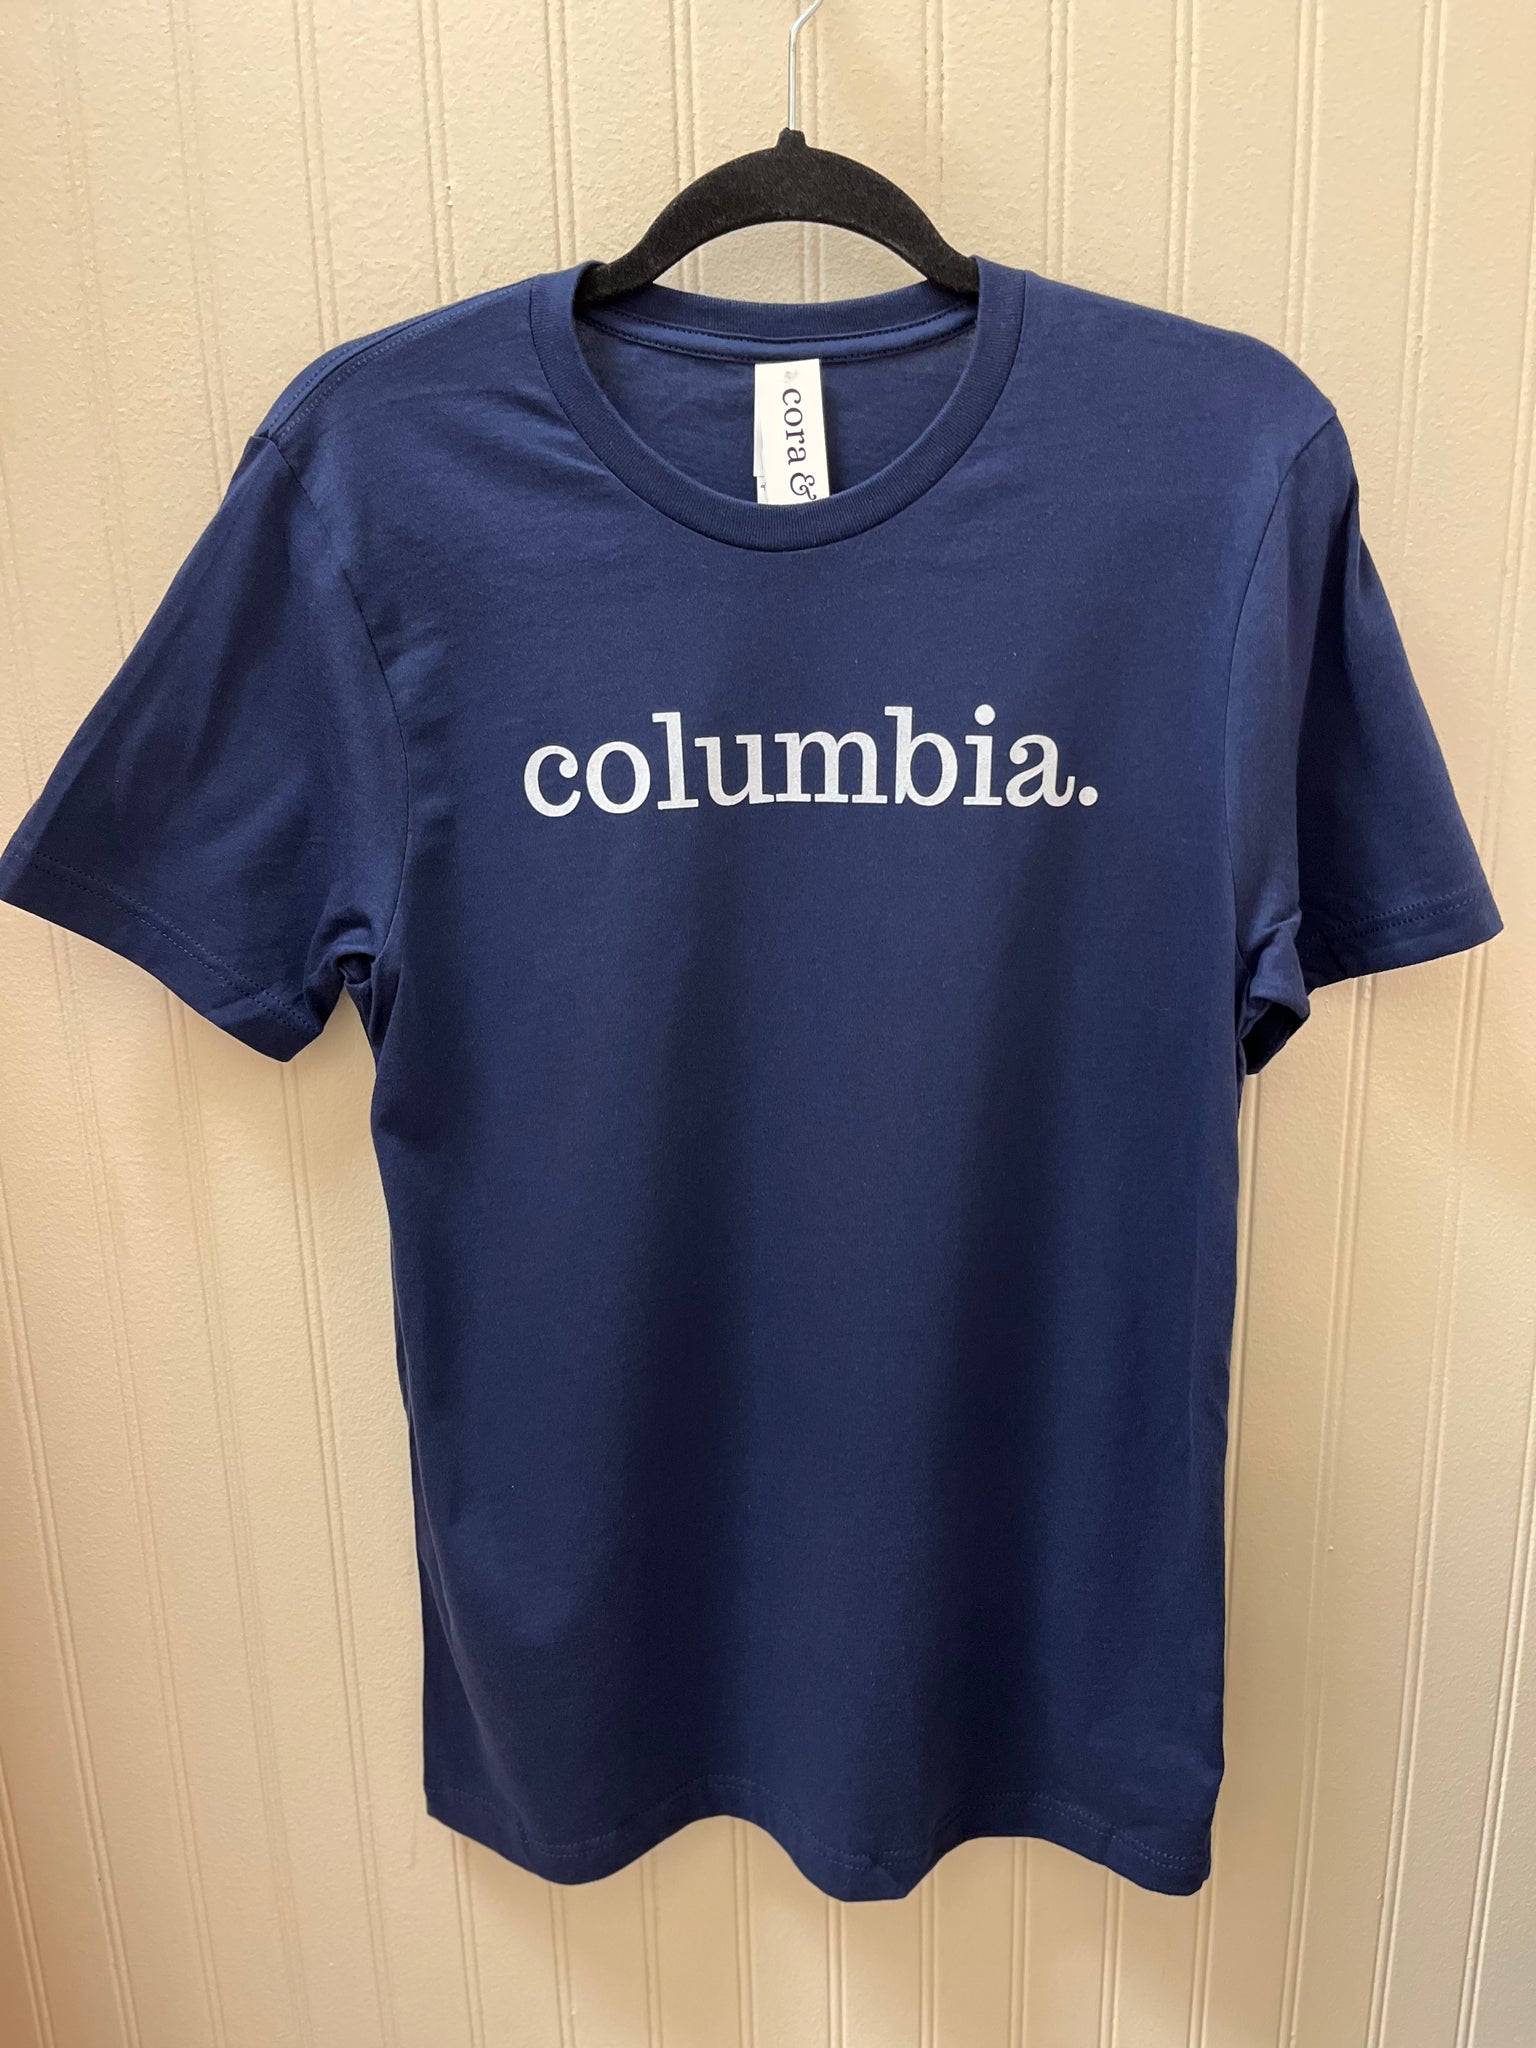 columbia. T-shirt